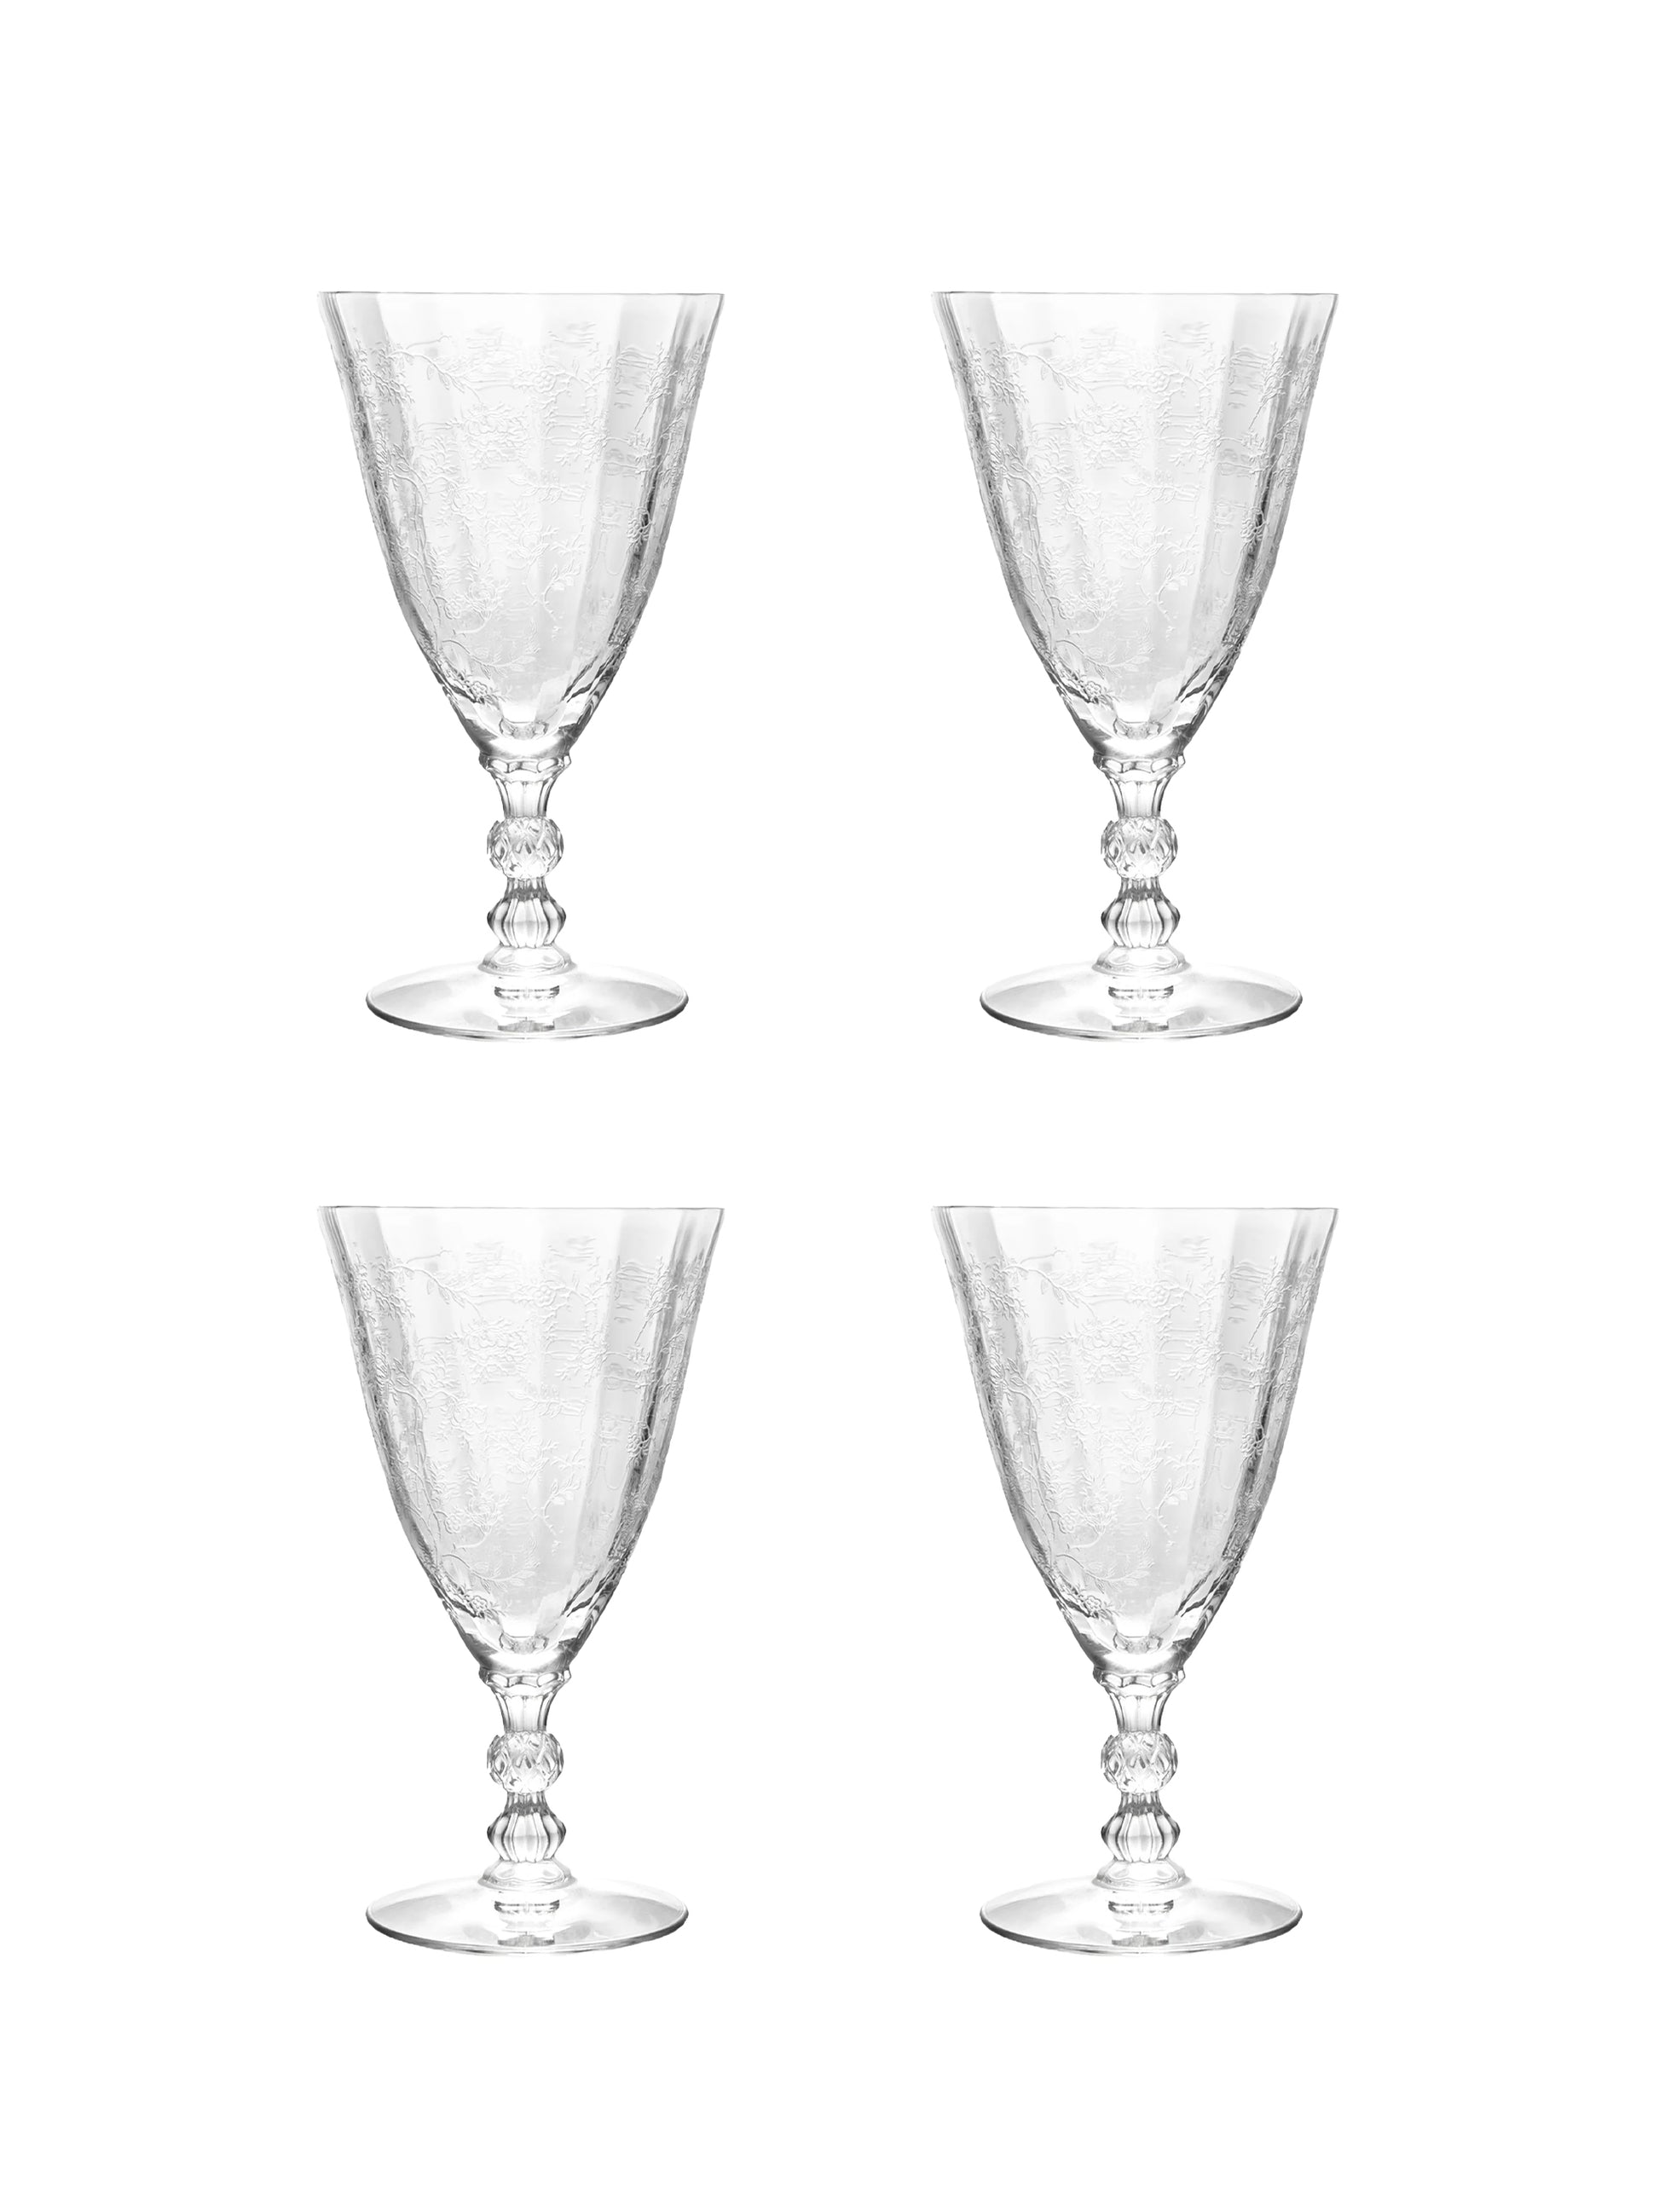 Vintage 1940s Fostoria Crystal Glasses Set of Four